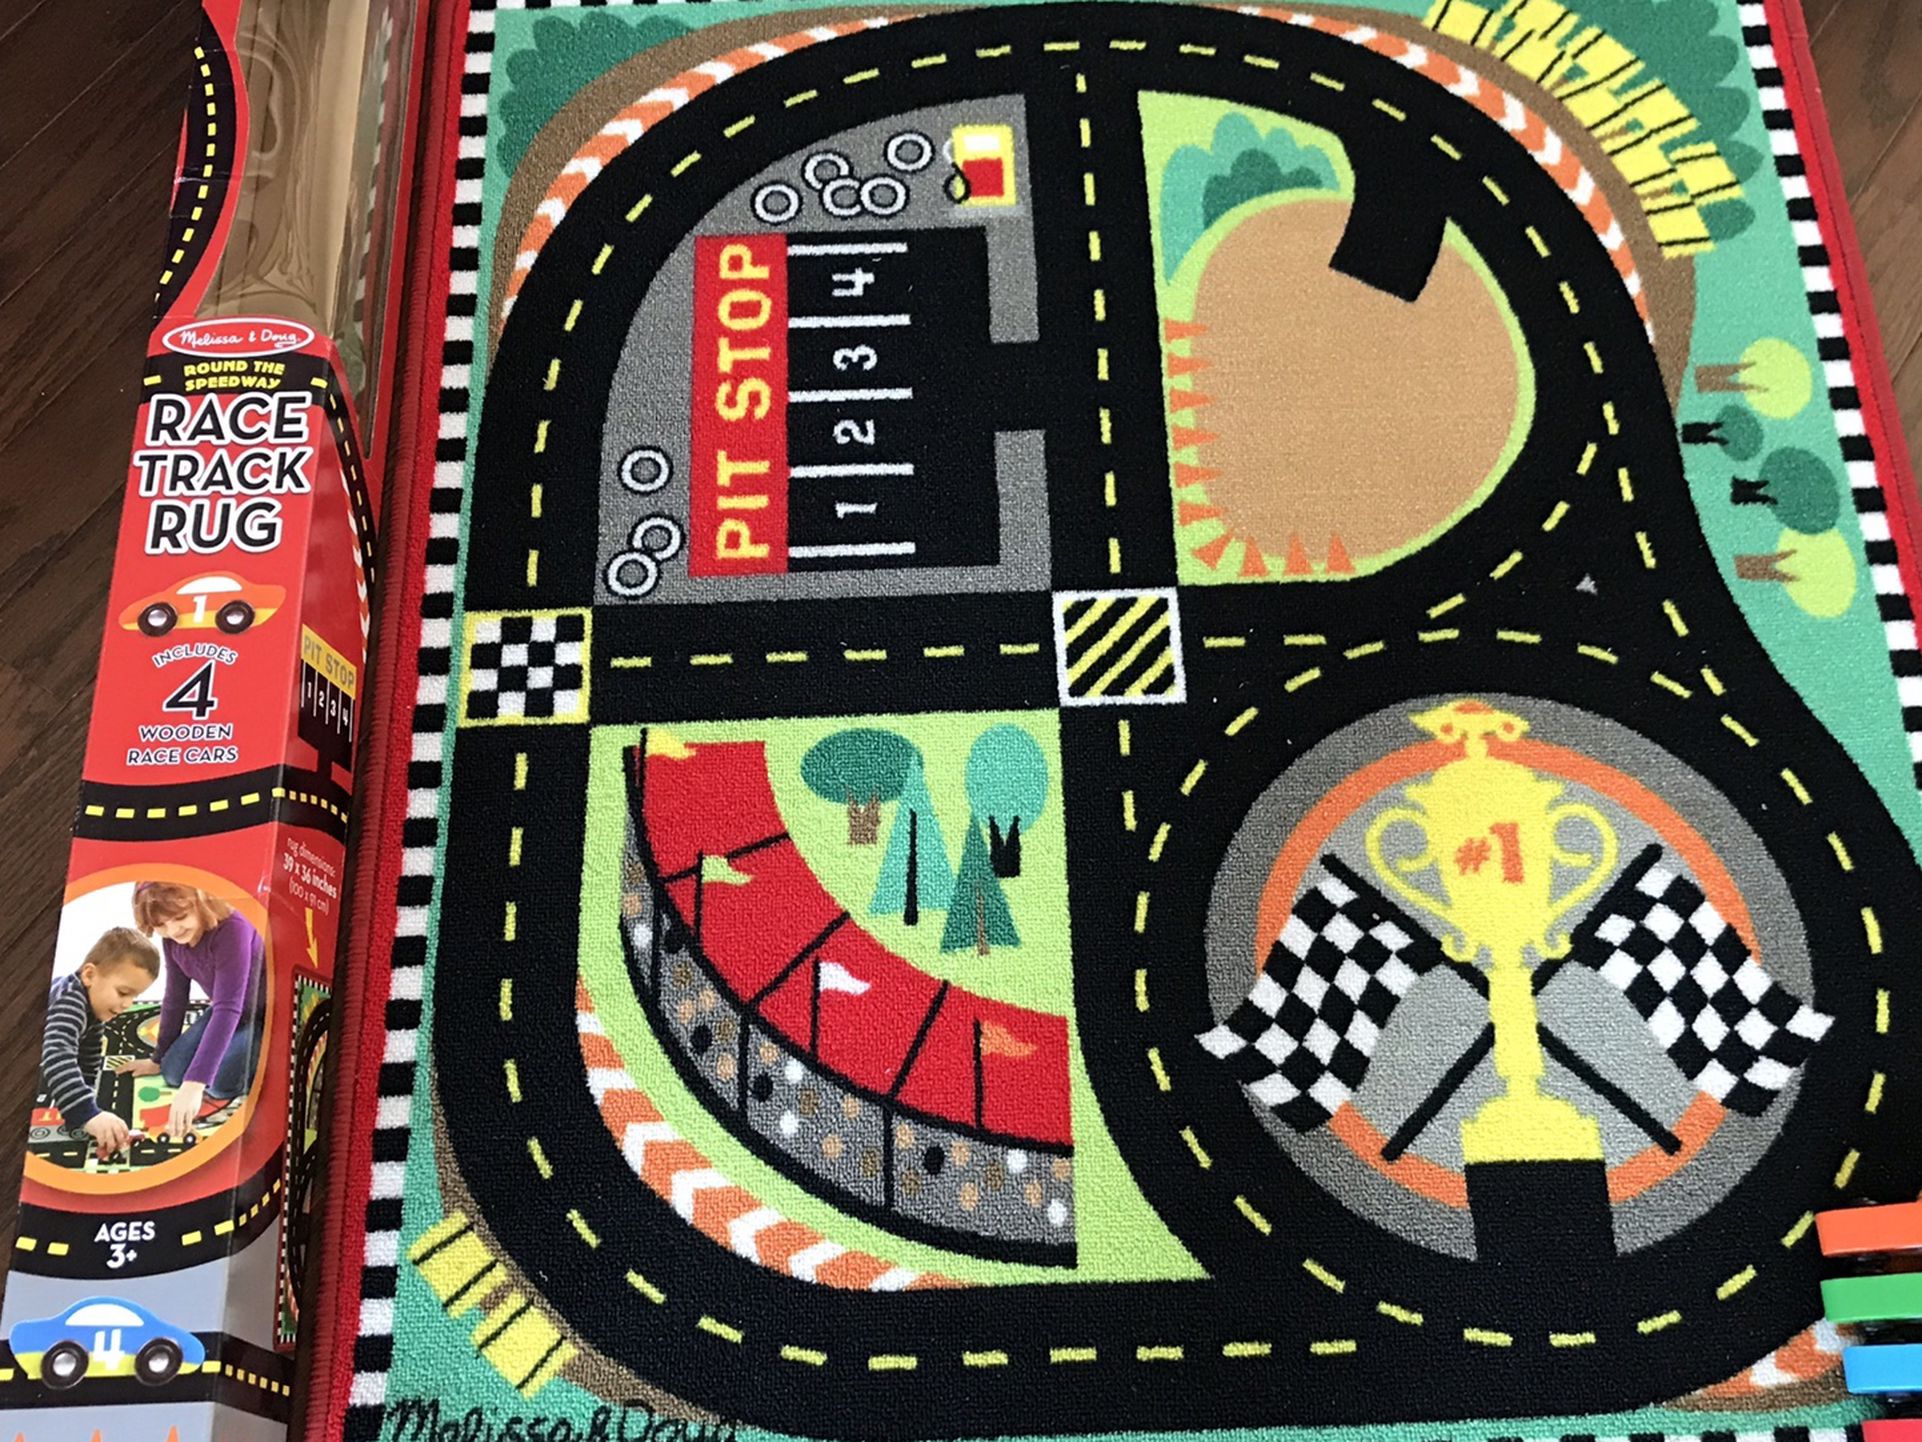 NIB - race track rug and cars